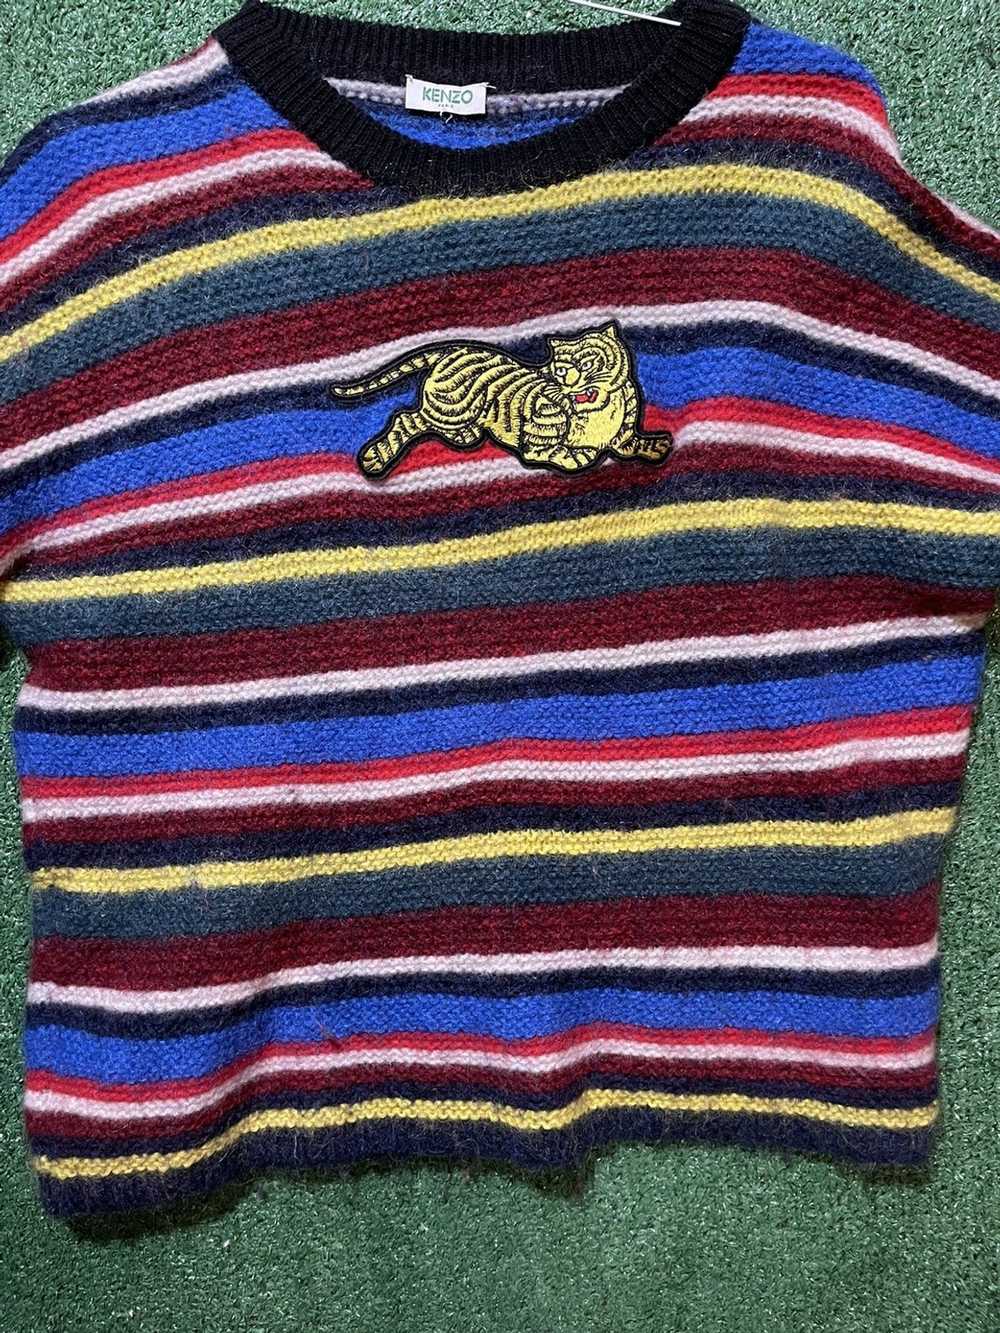 Kenzo Kenzo tiger crew neck knit sweater - image 1